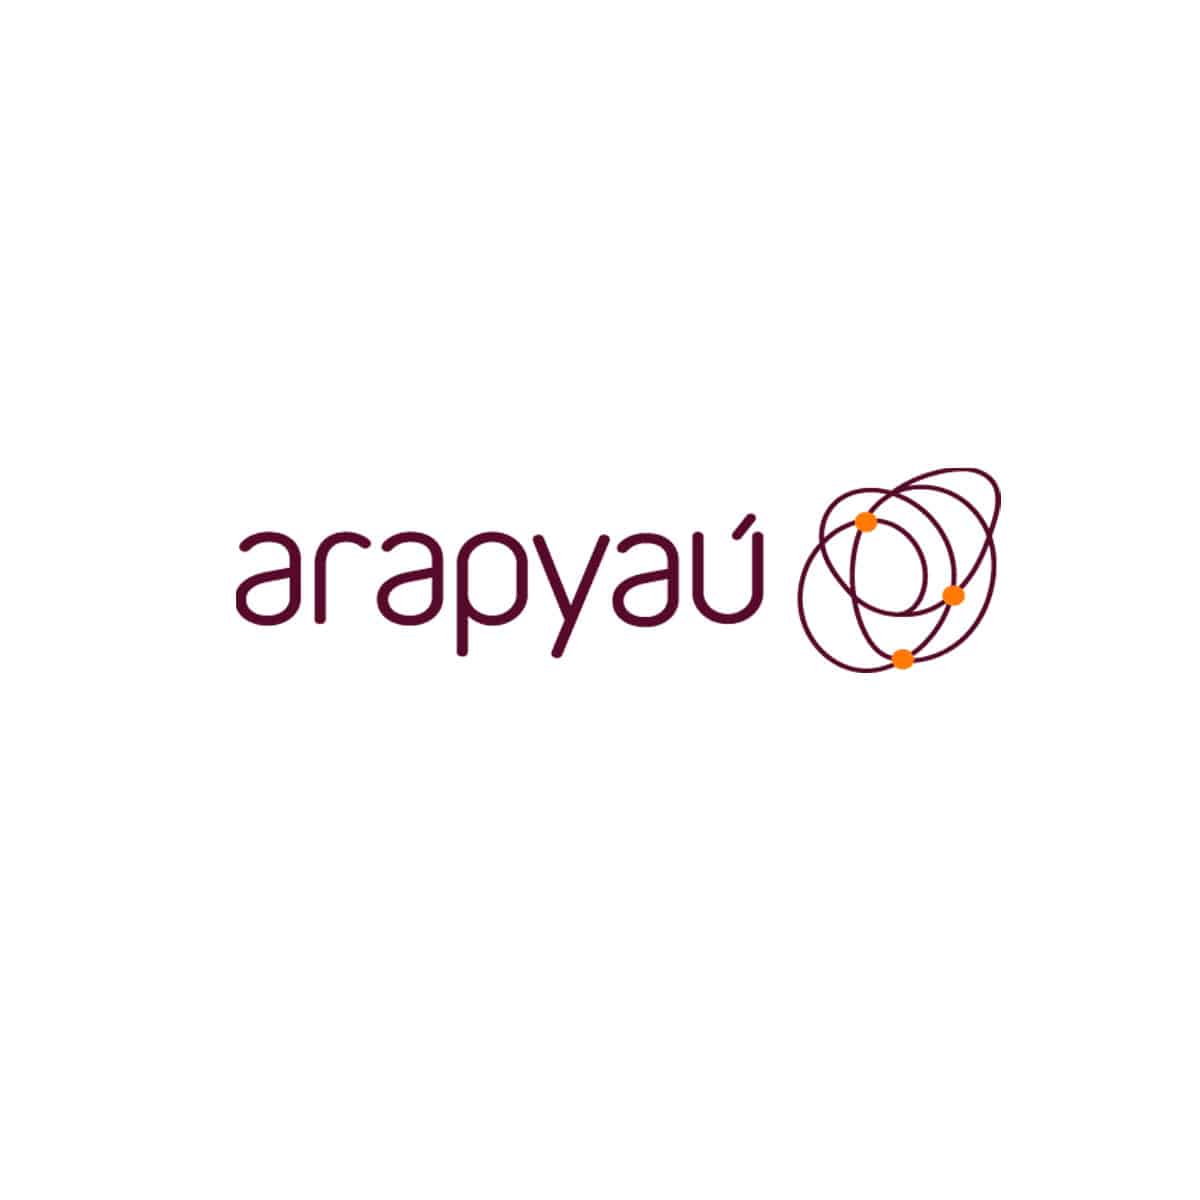 Instituto Arapyaú - Cliente Malka Digital